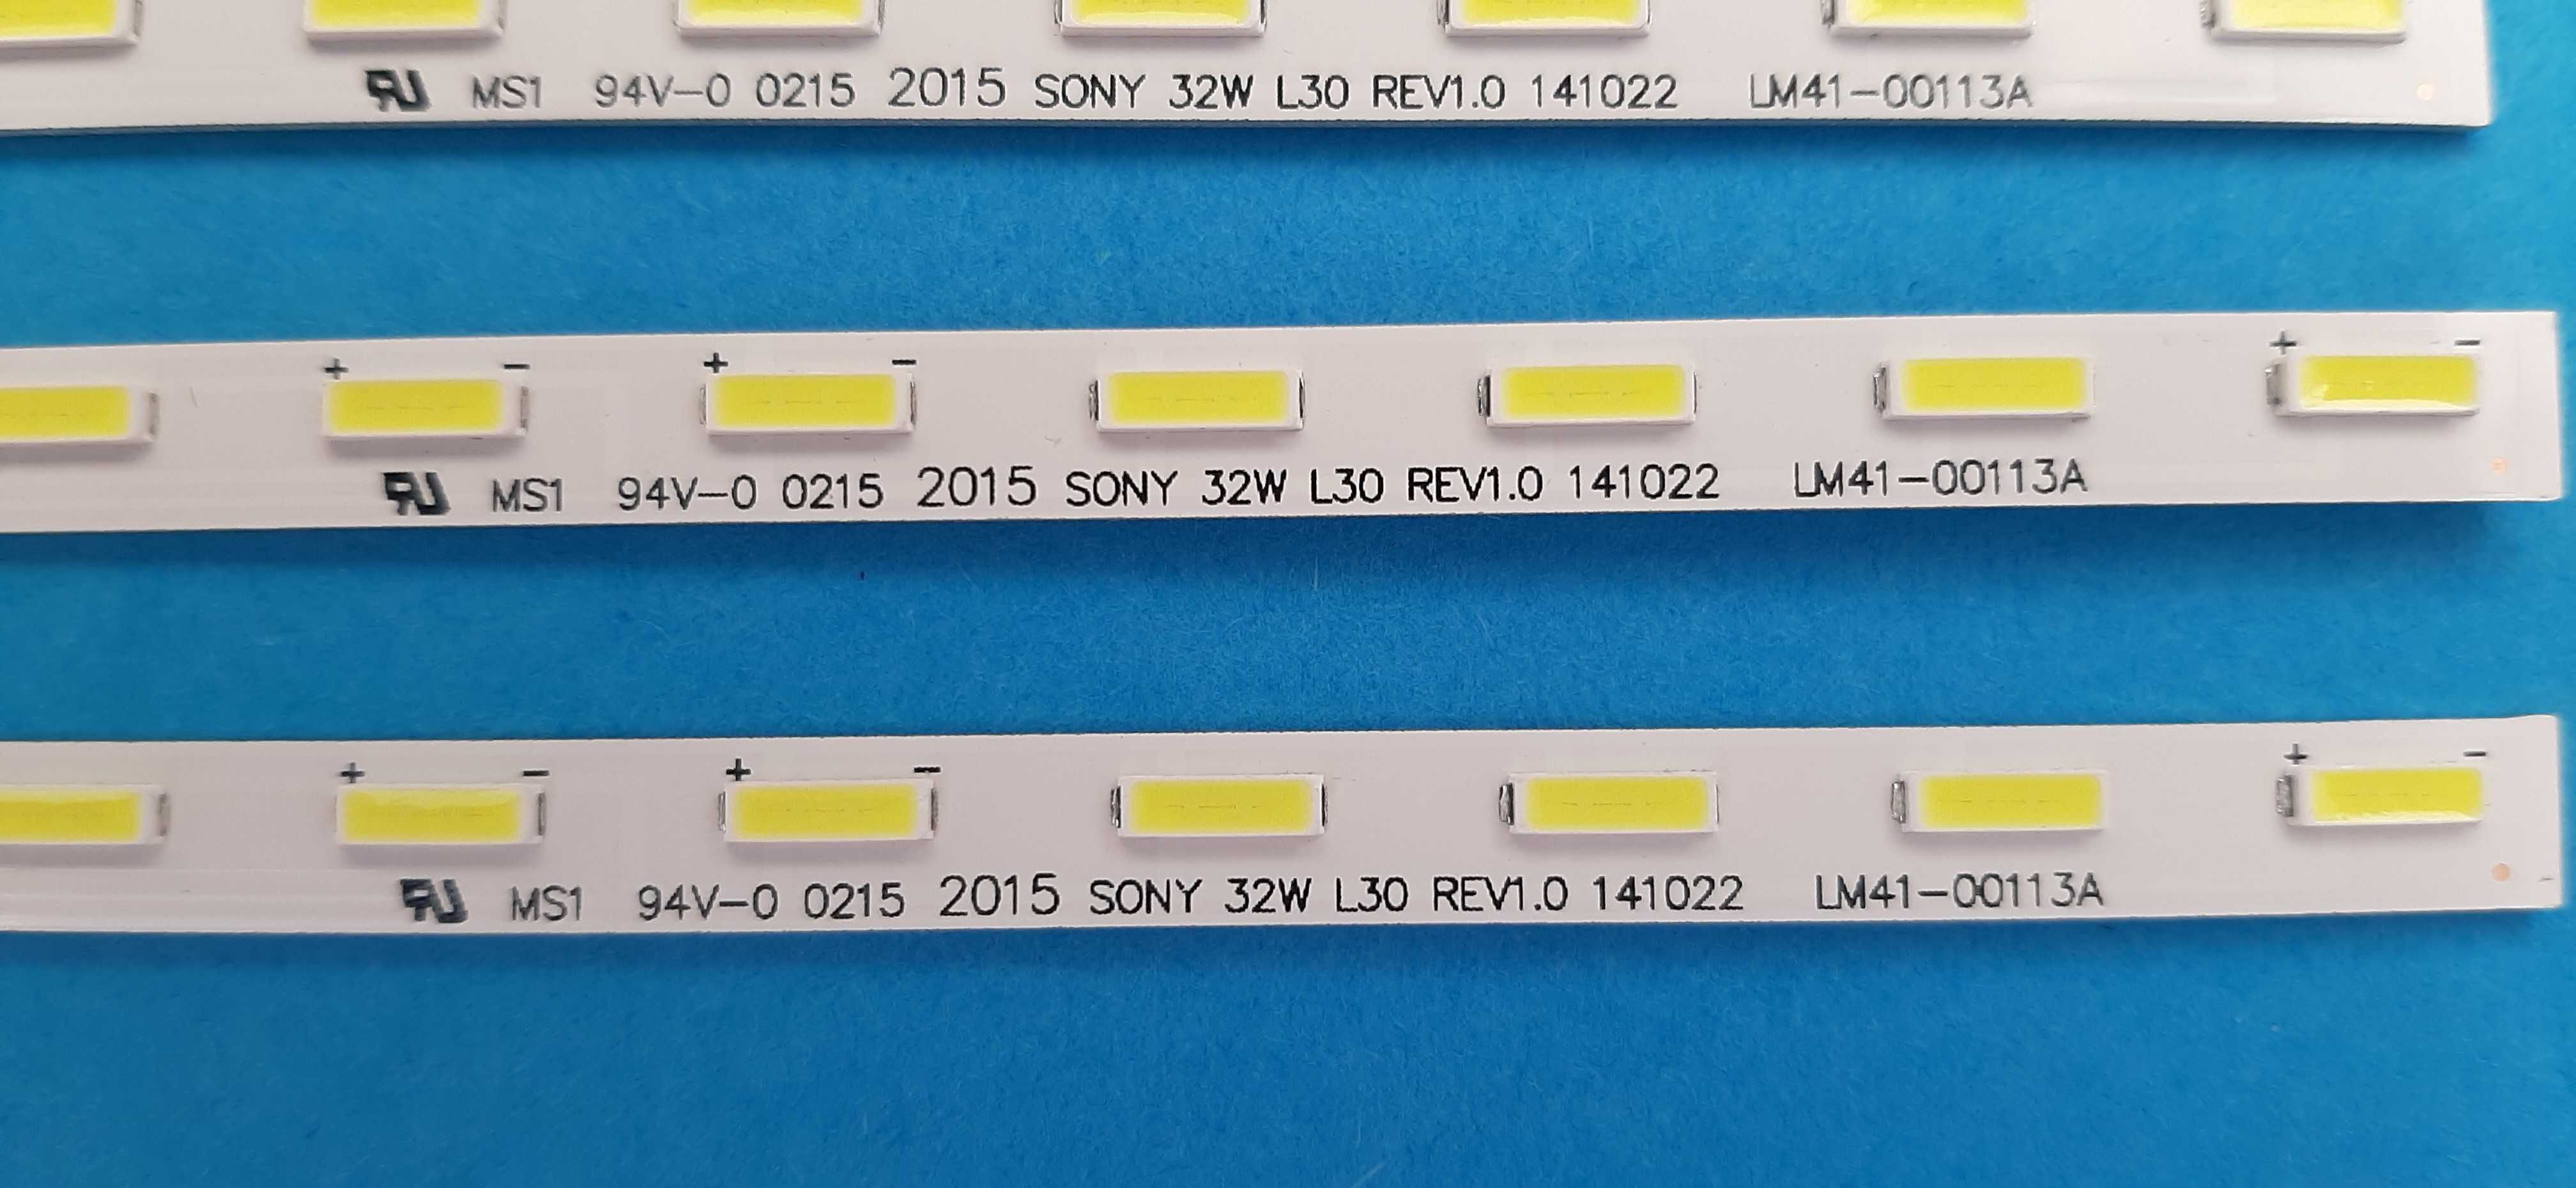 SONY KDL-32R503 32wl30   DL-32R500C LM41-00113A IS5S320VNO02 2015 SONY